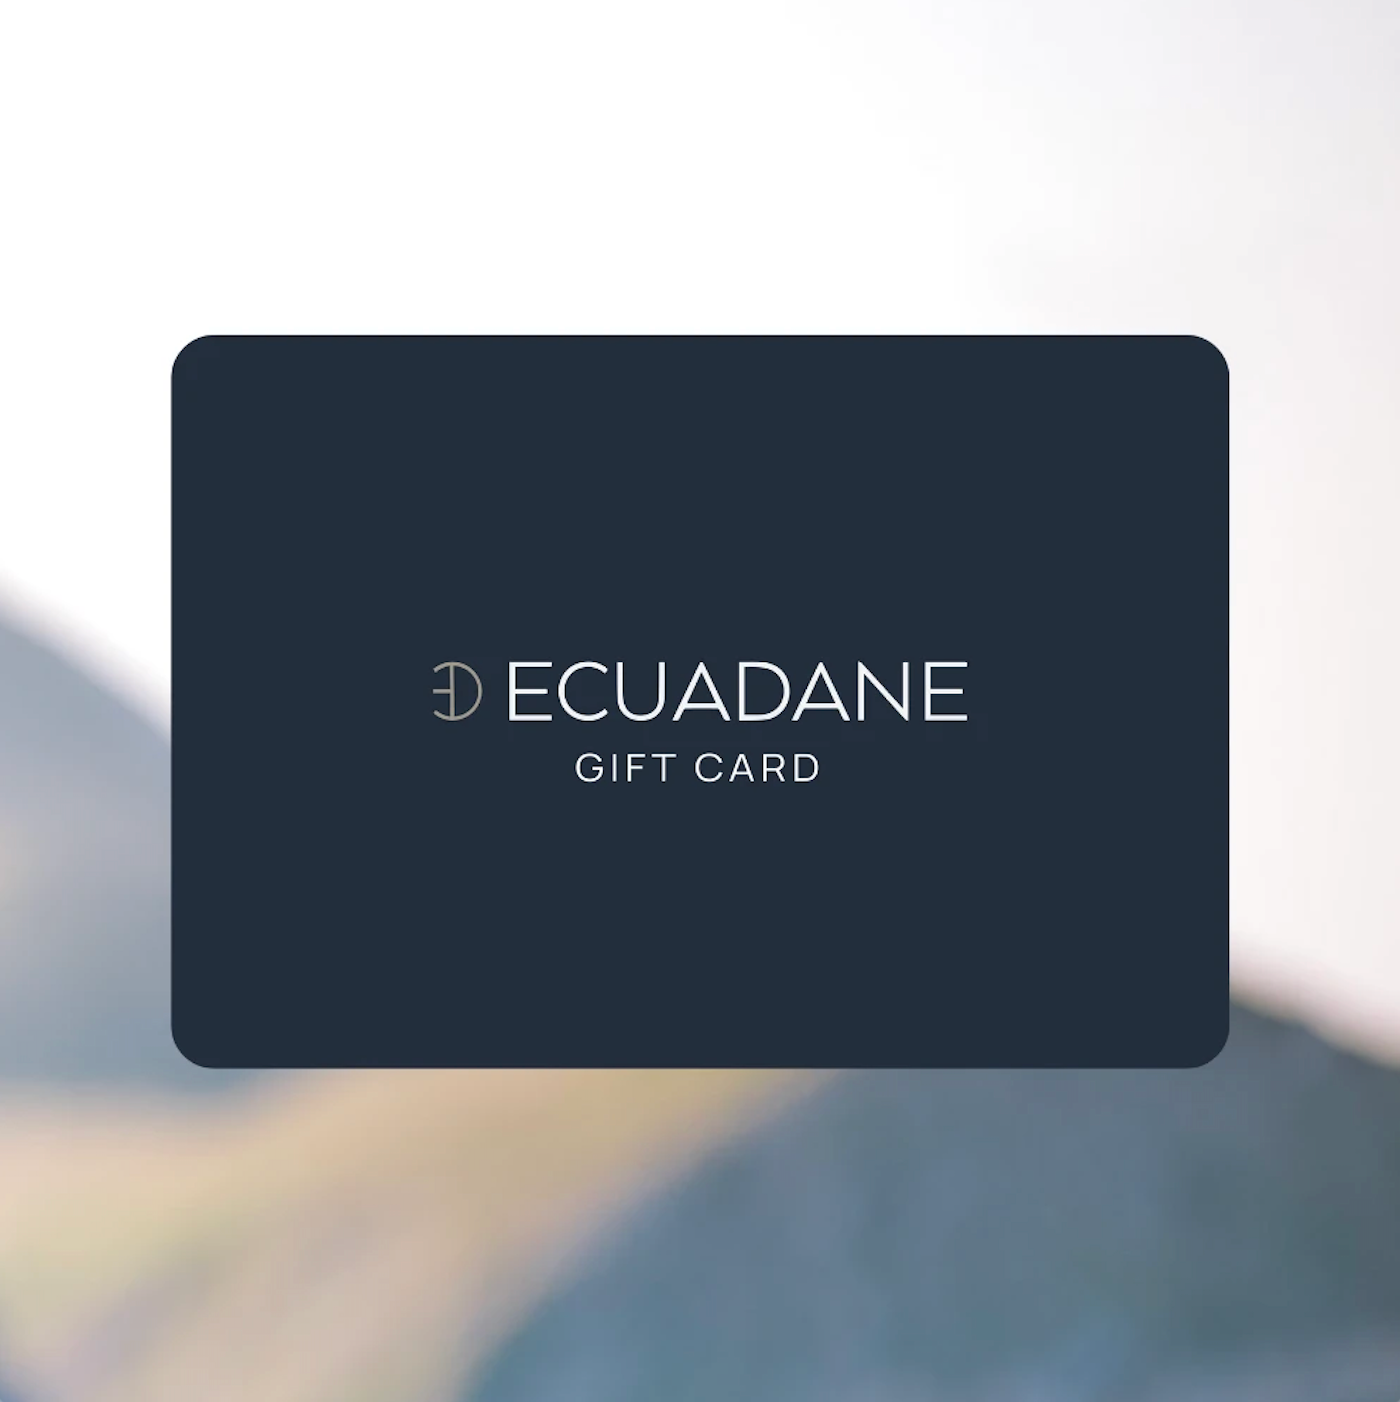 Ecuadane Gift Card